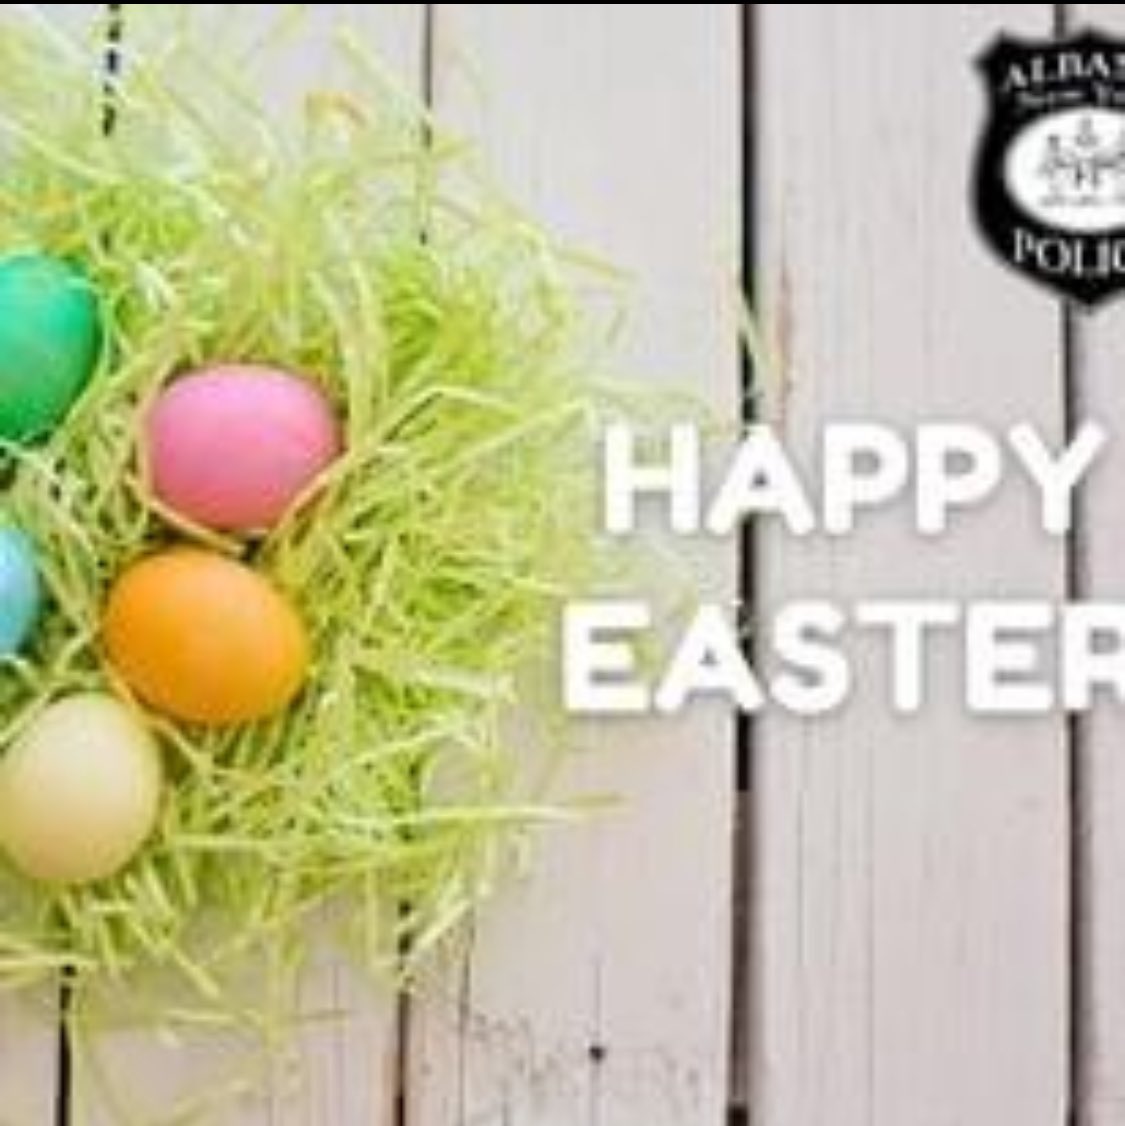 🐣 Wishing everyone a safe and joyful Easter 🐣